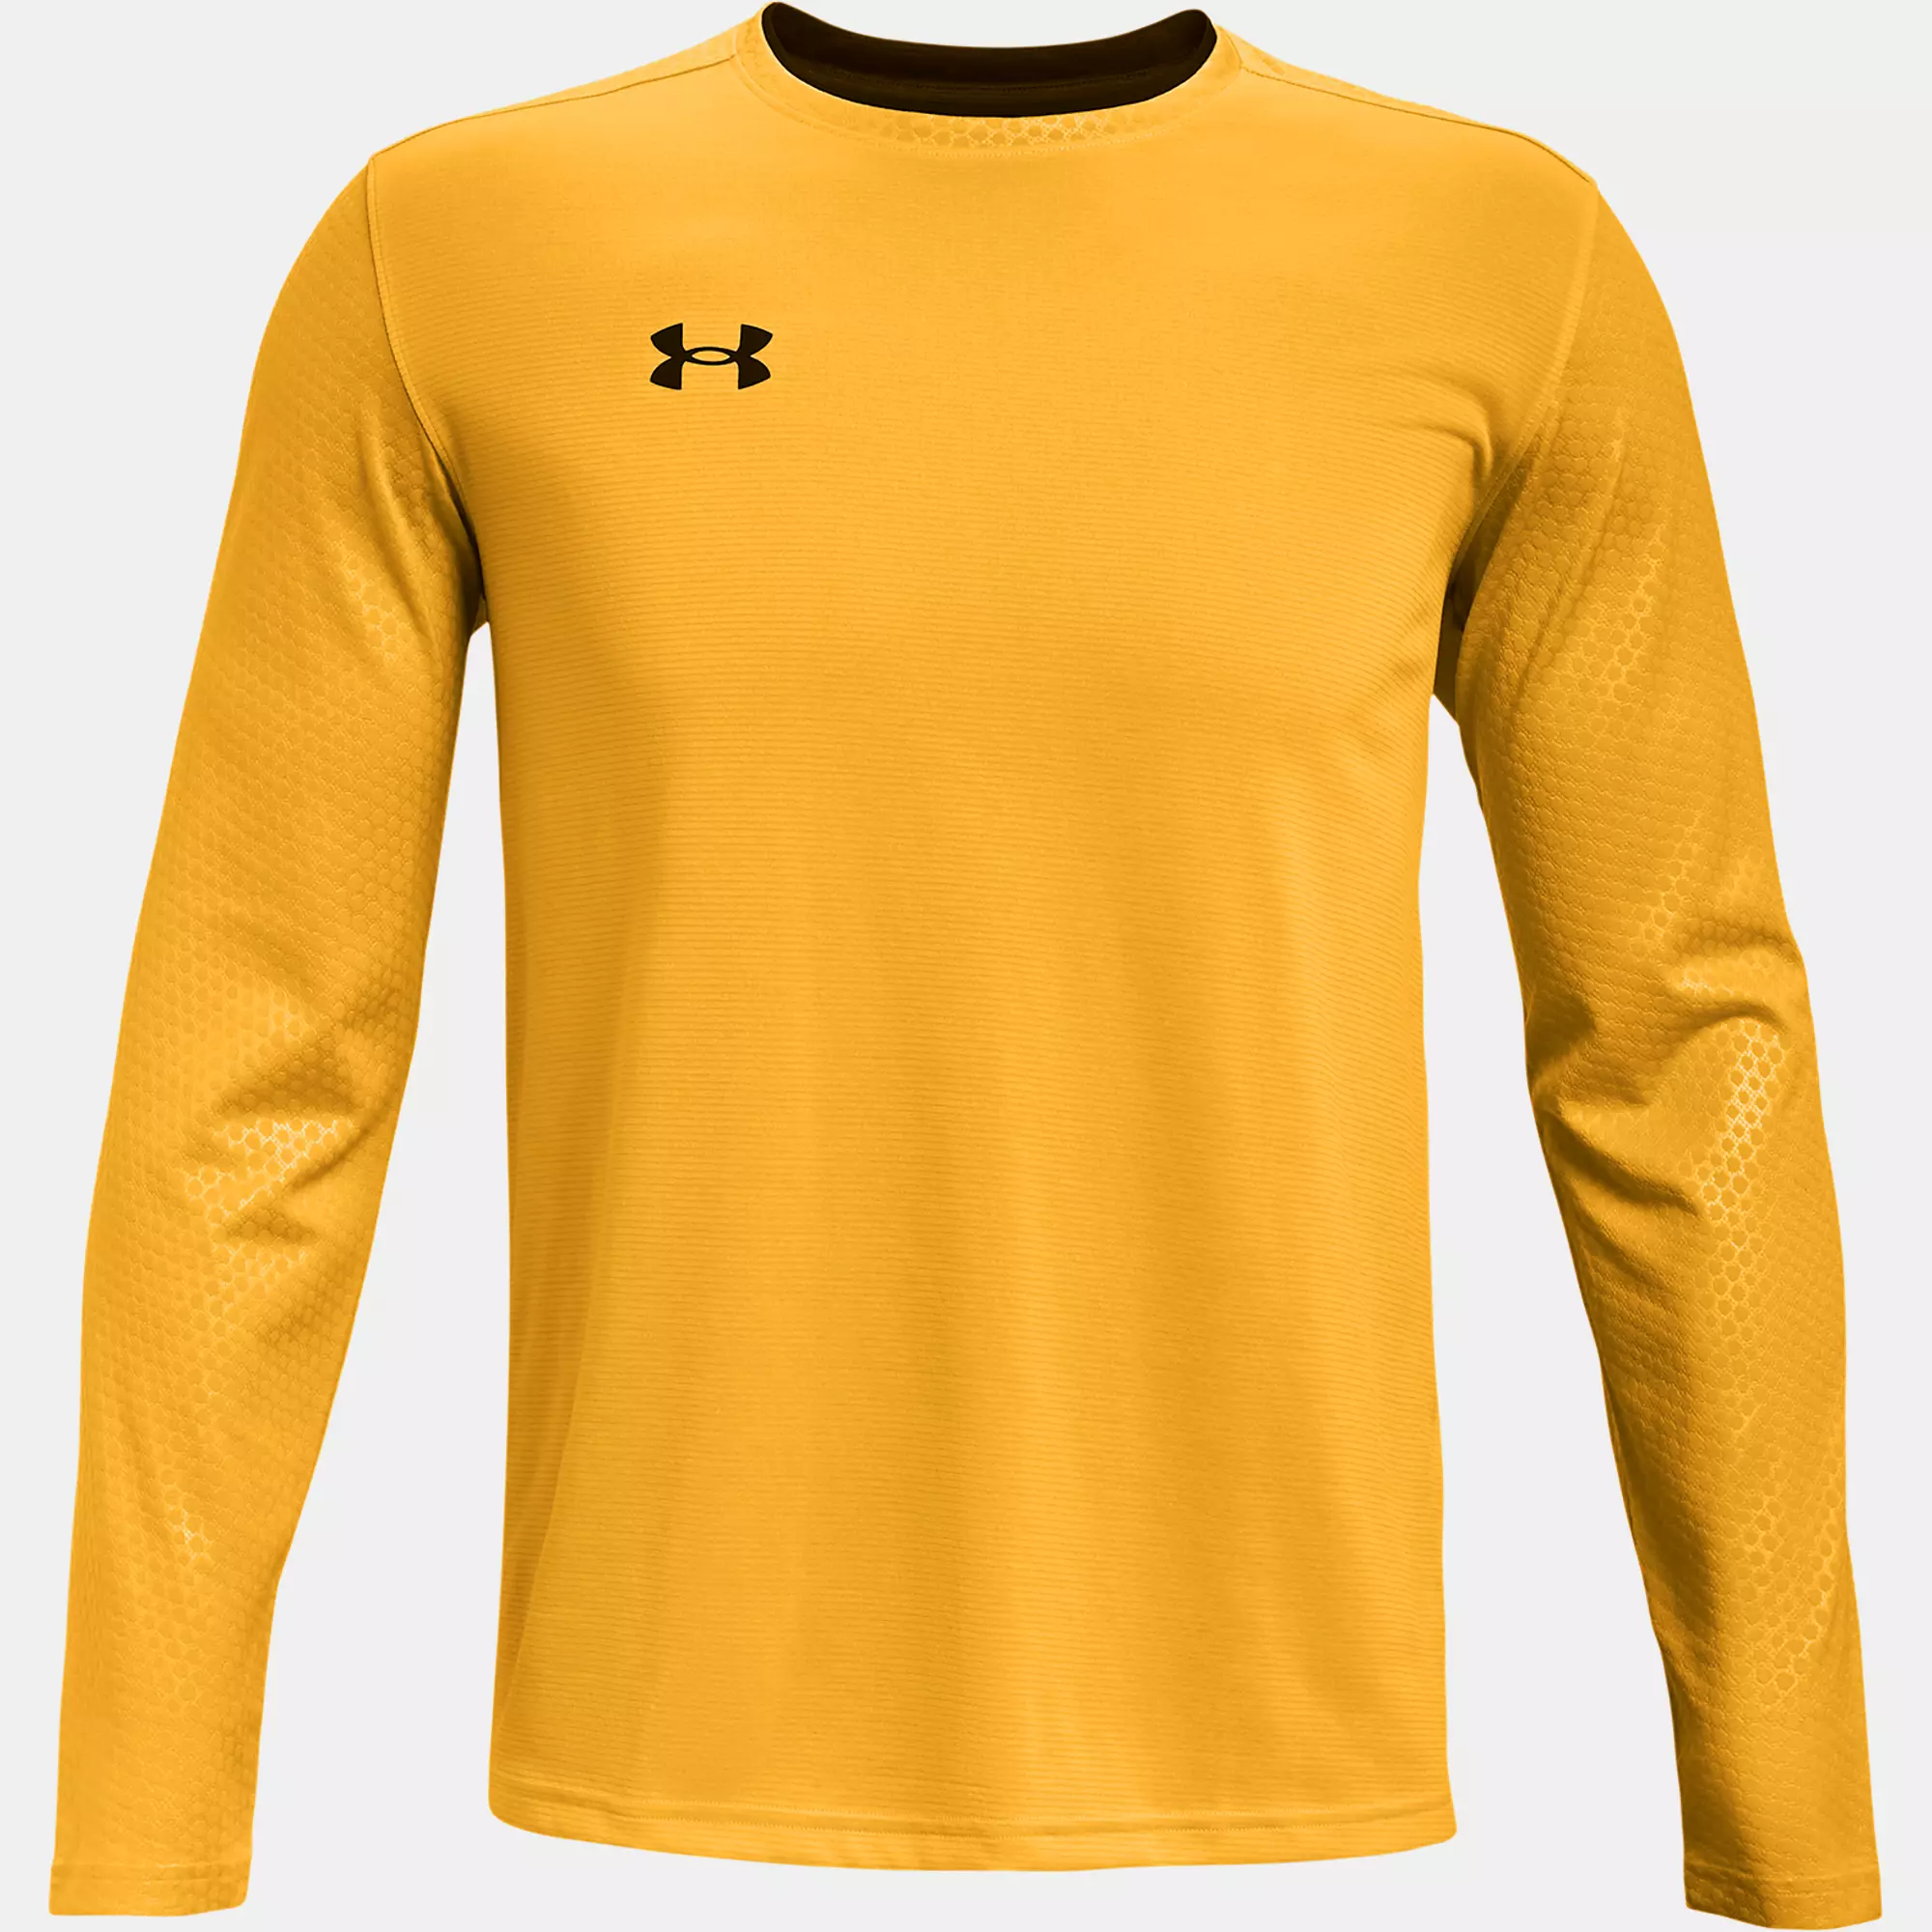 Blank Yellow Goalkeeper Long Sleeves Jersey